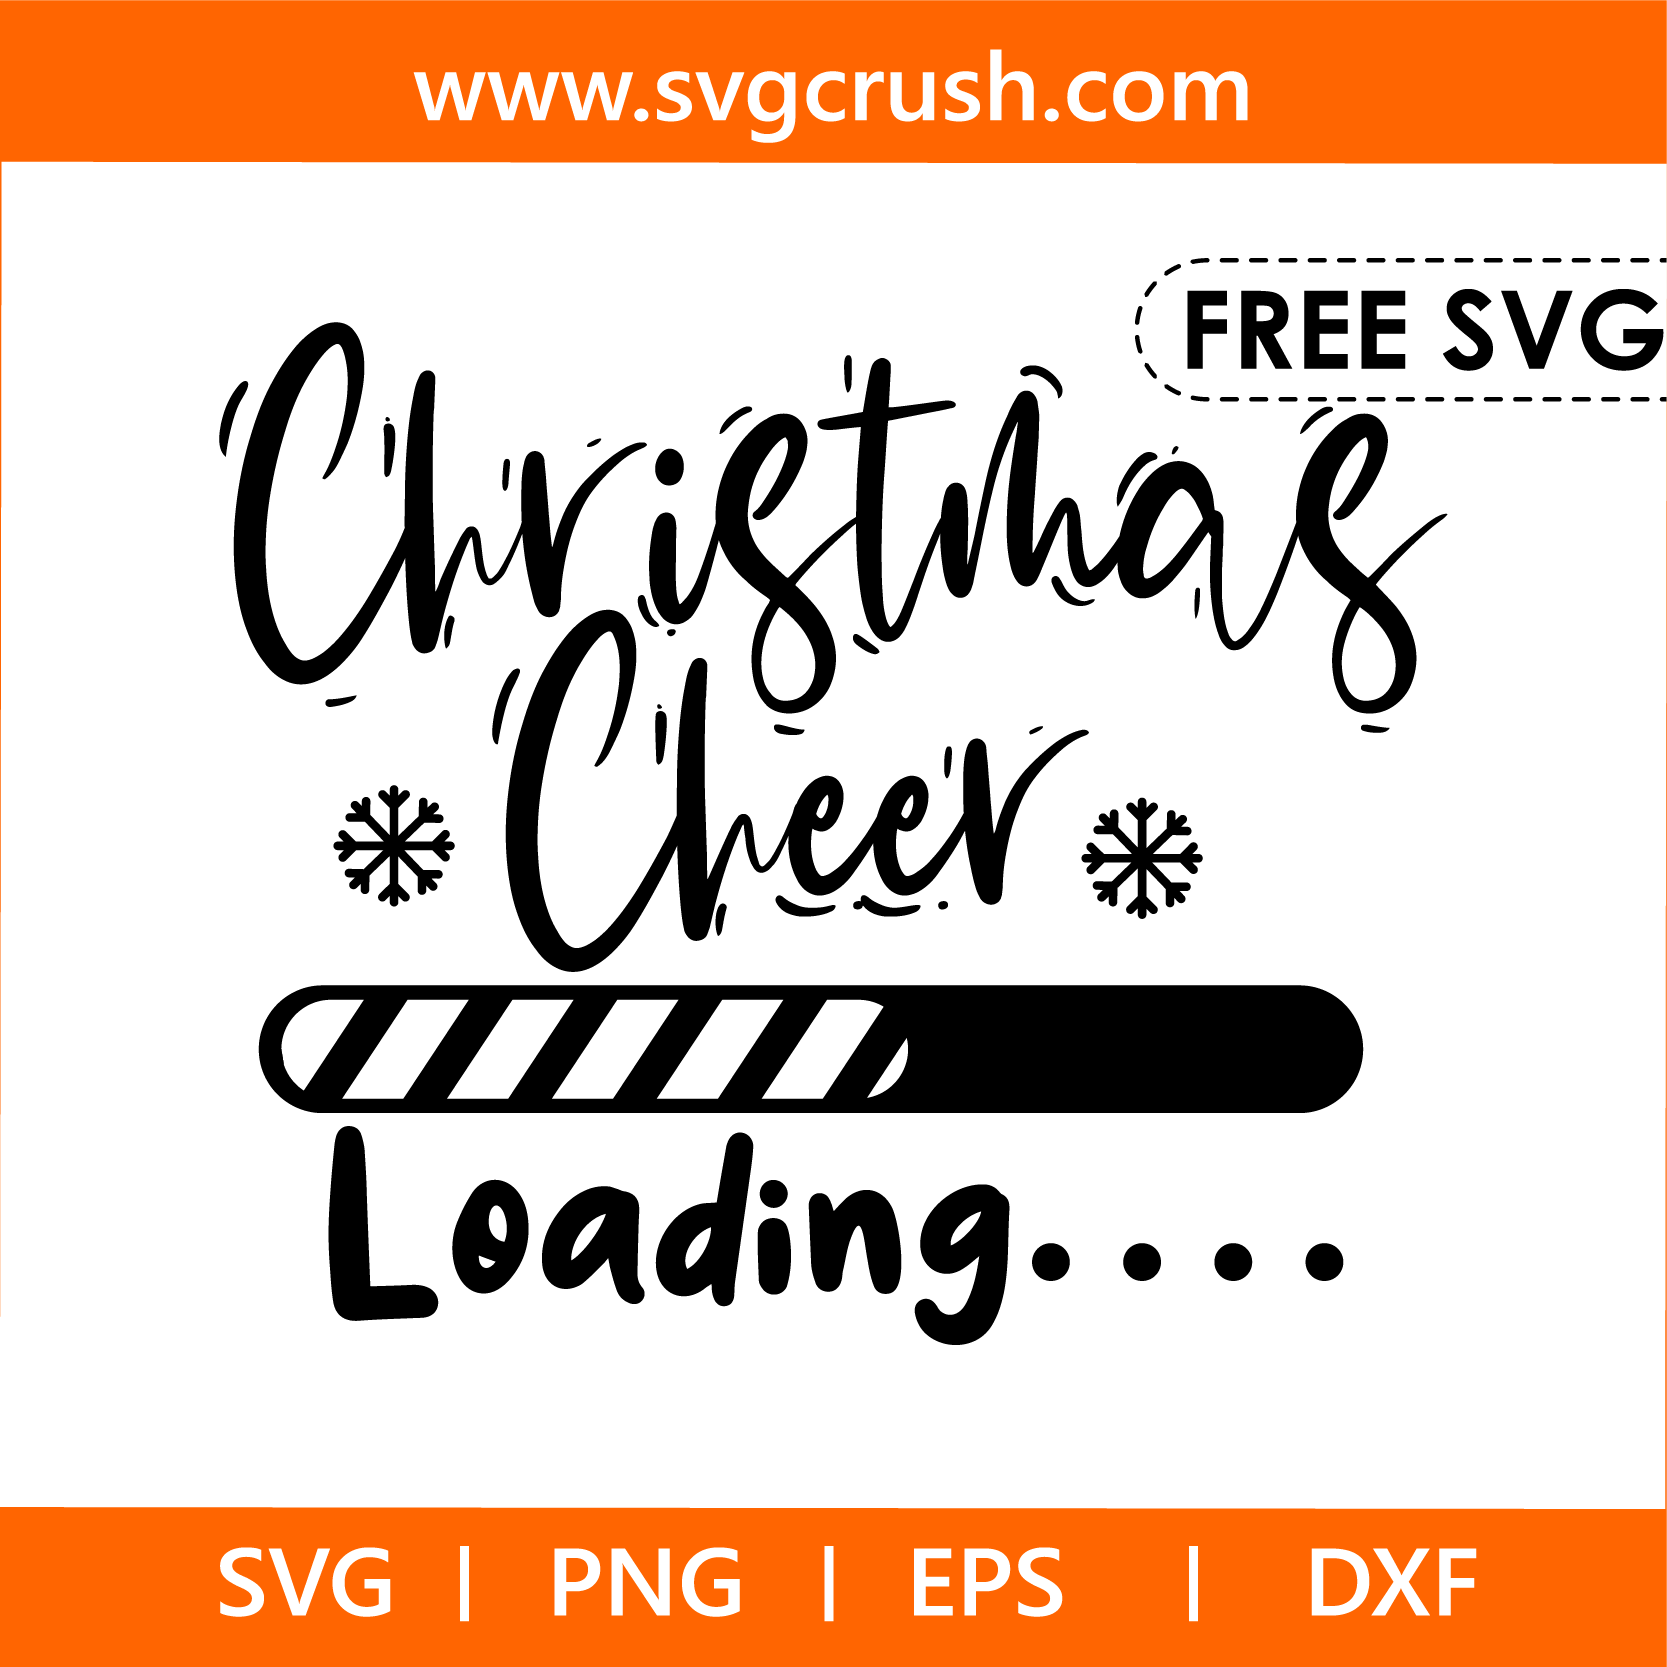 free christmas-cheer-loading-005 svg